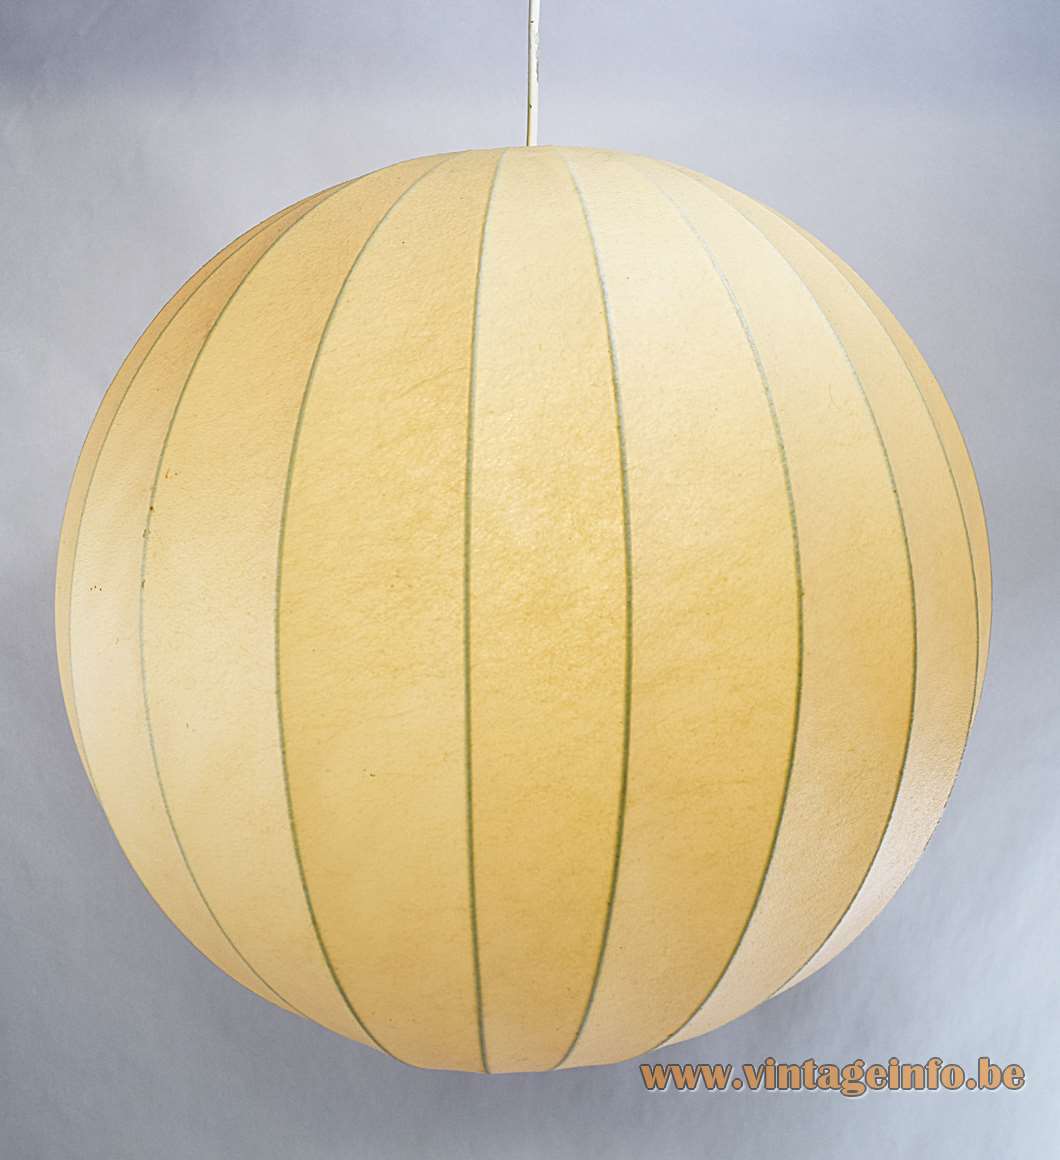 Raak Chrysaline pendant lamp big Cocoon plastic globe model B-1057 1950s 1960s vintage light MCM